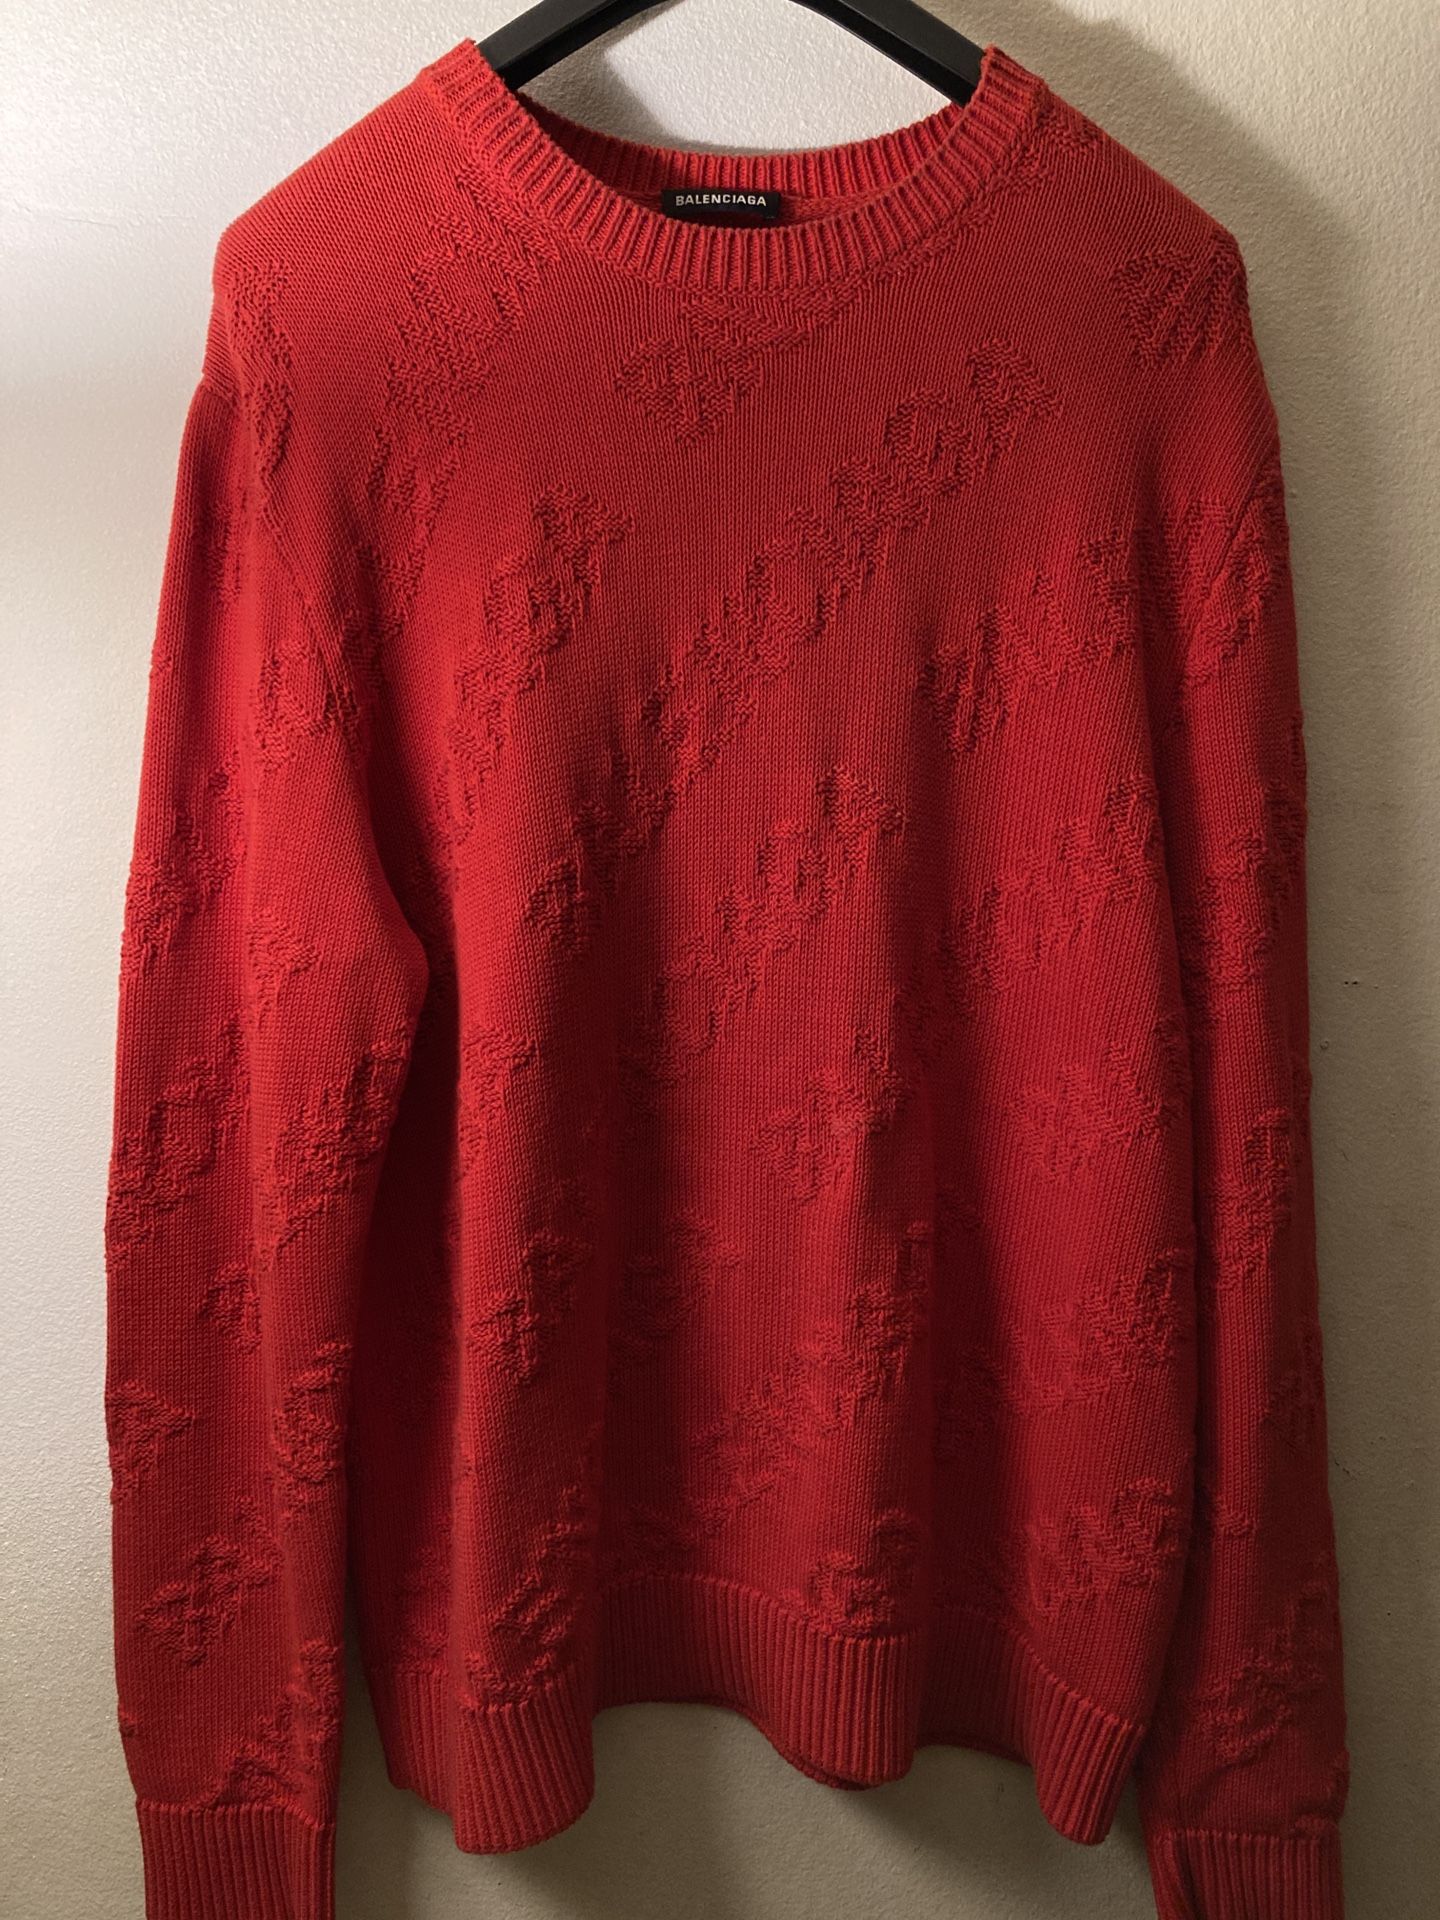 Authentic Balenciaga Cotton Red Knit Monogram Sweater Size Large/ Extra Large